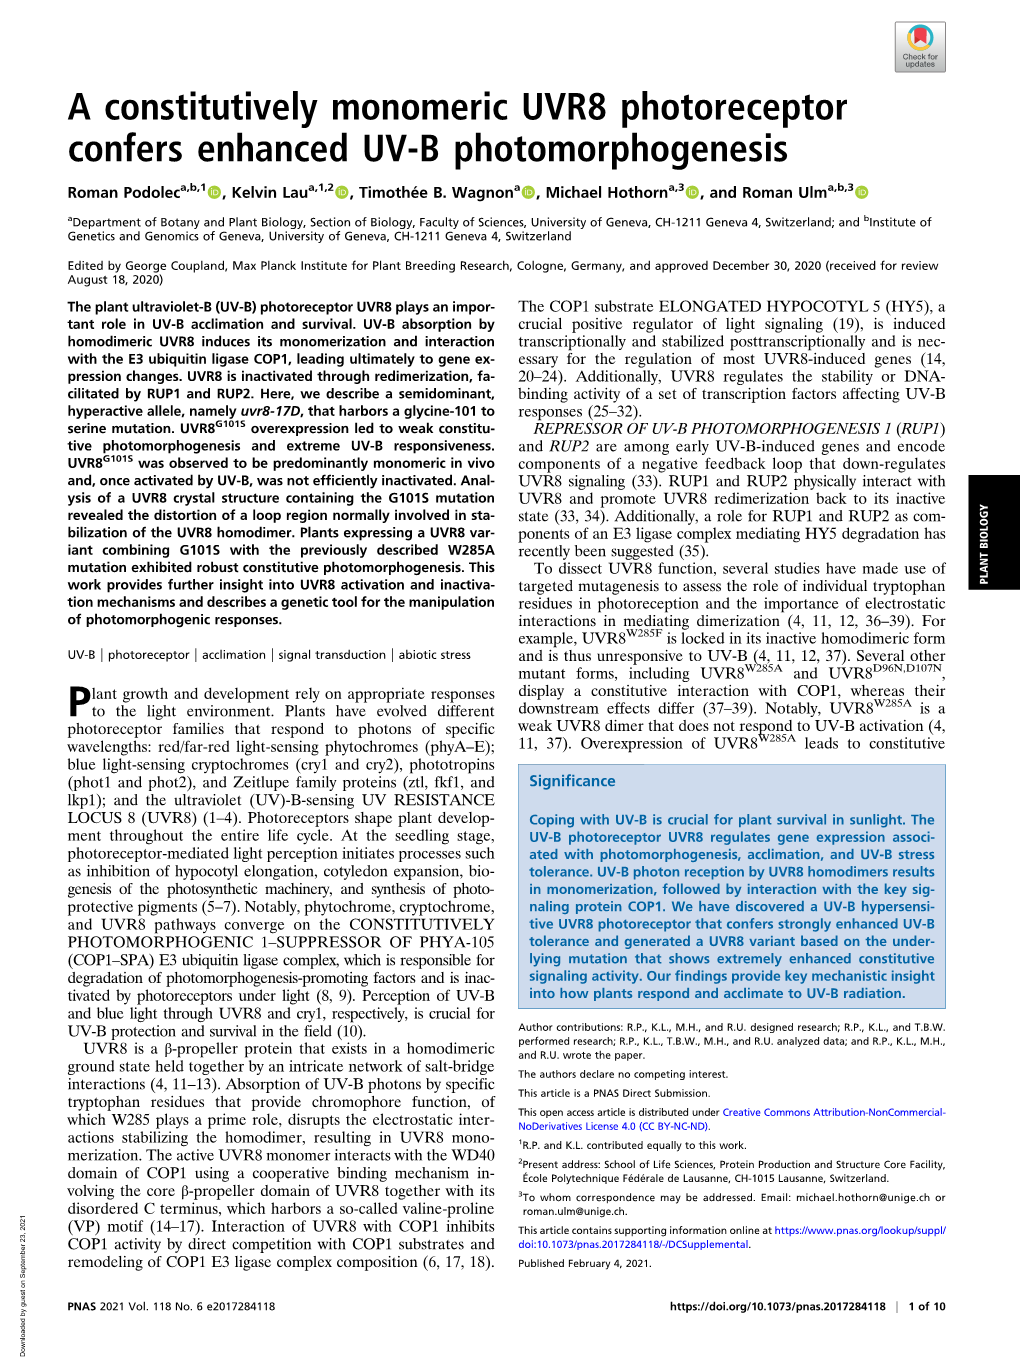 A Constitutively Monomeric UVR8 Photoreceptor Confers Enhanced UV-B Photomorphogenesis